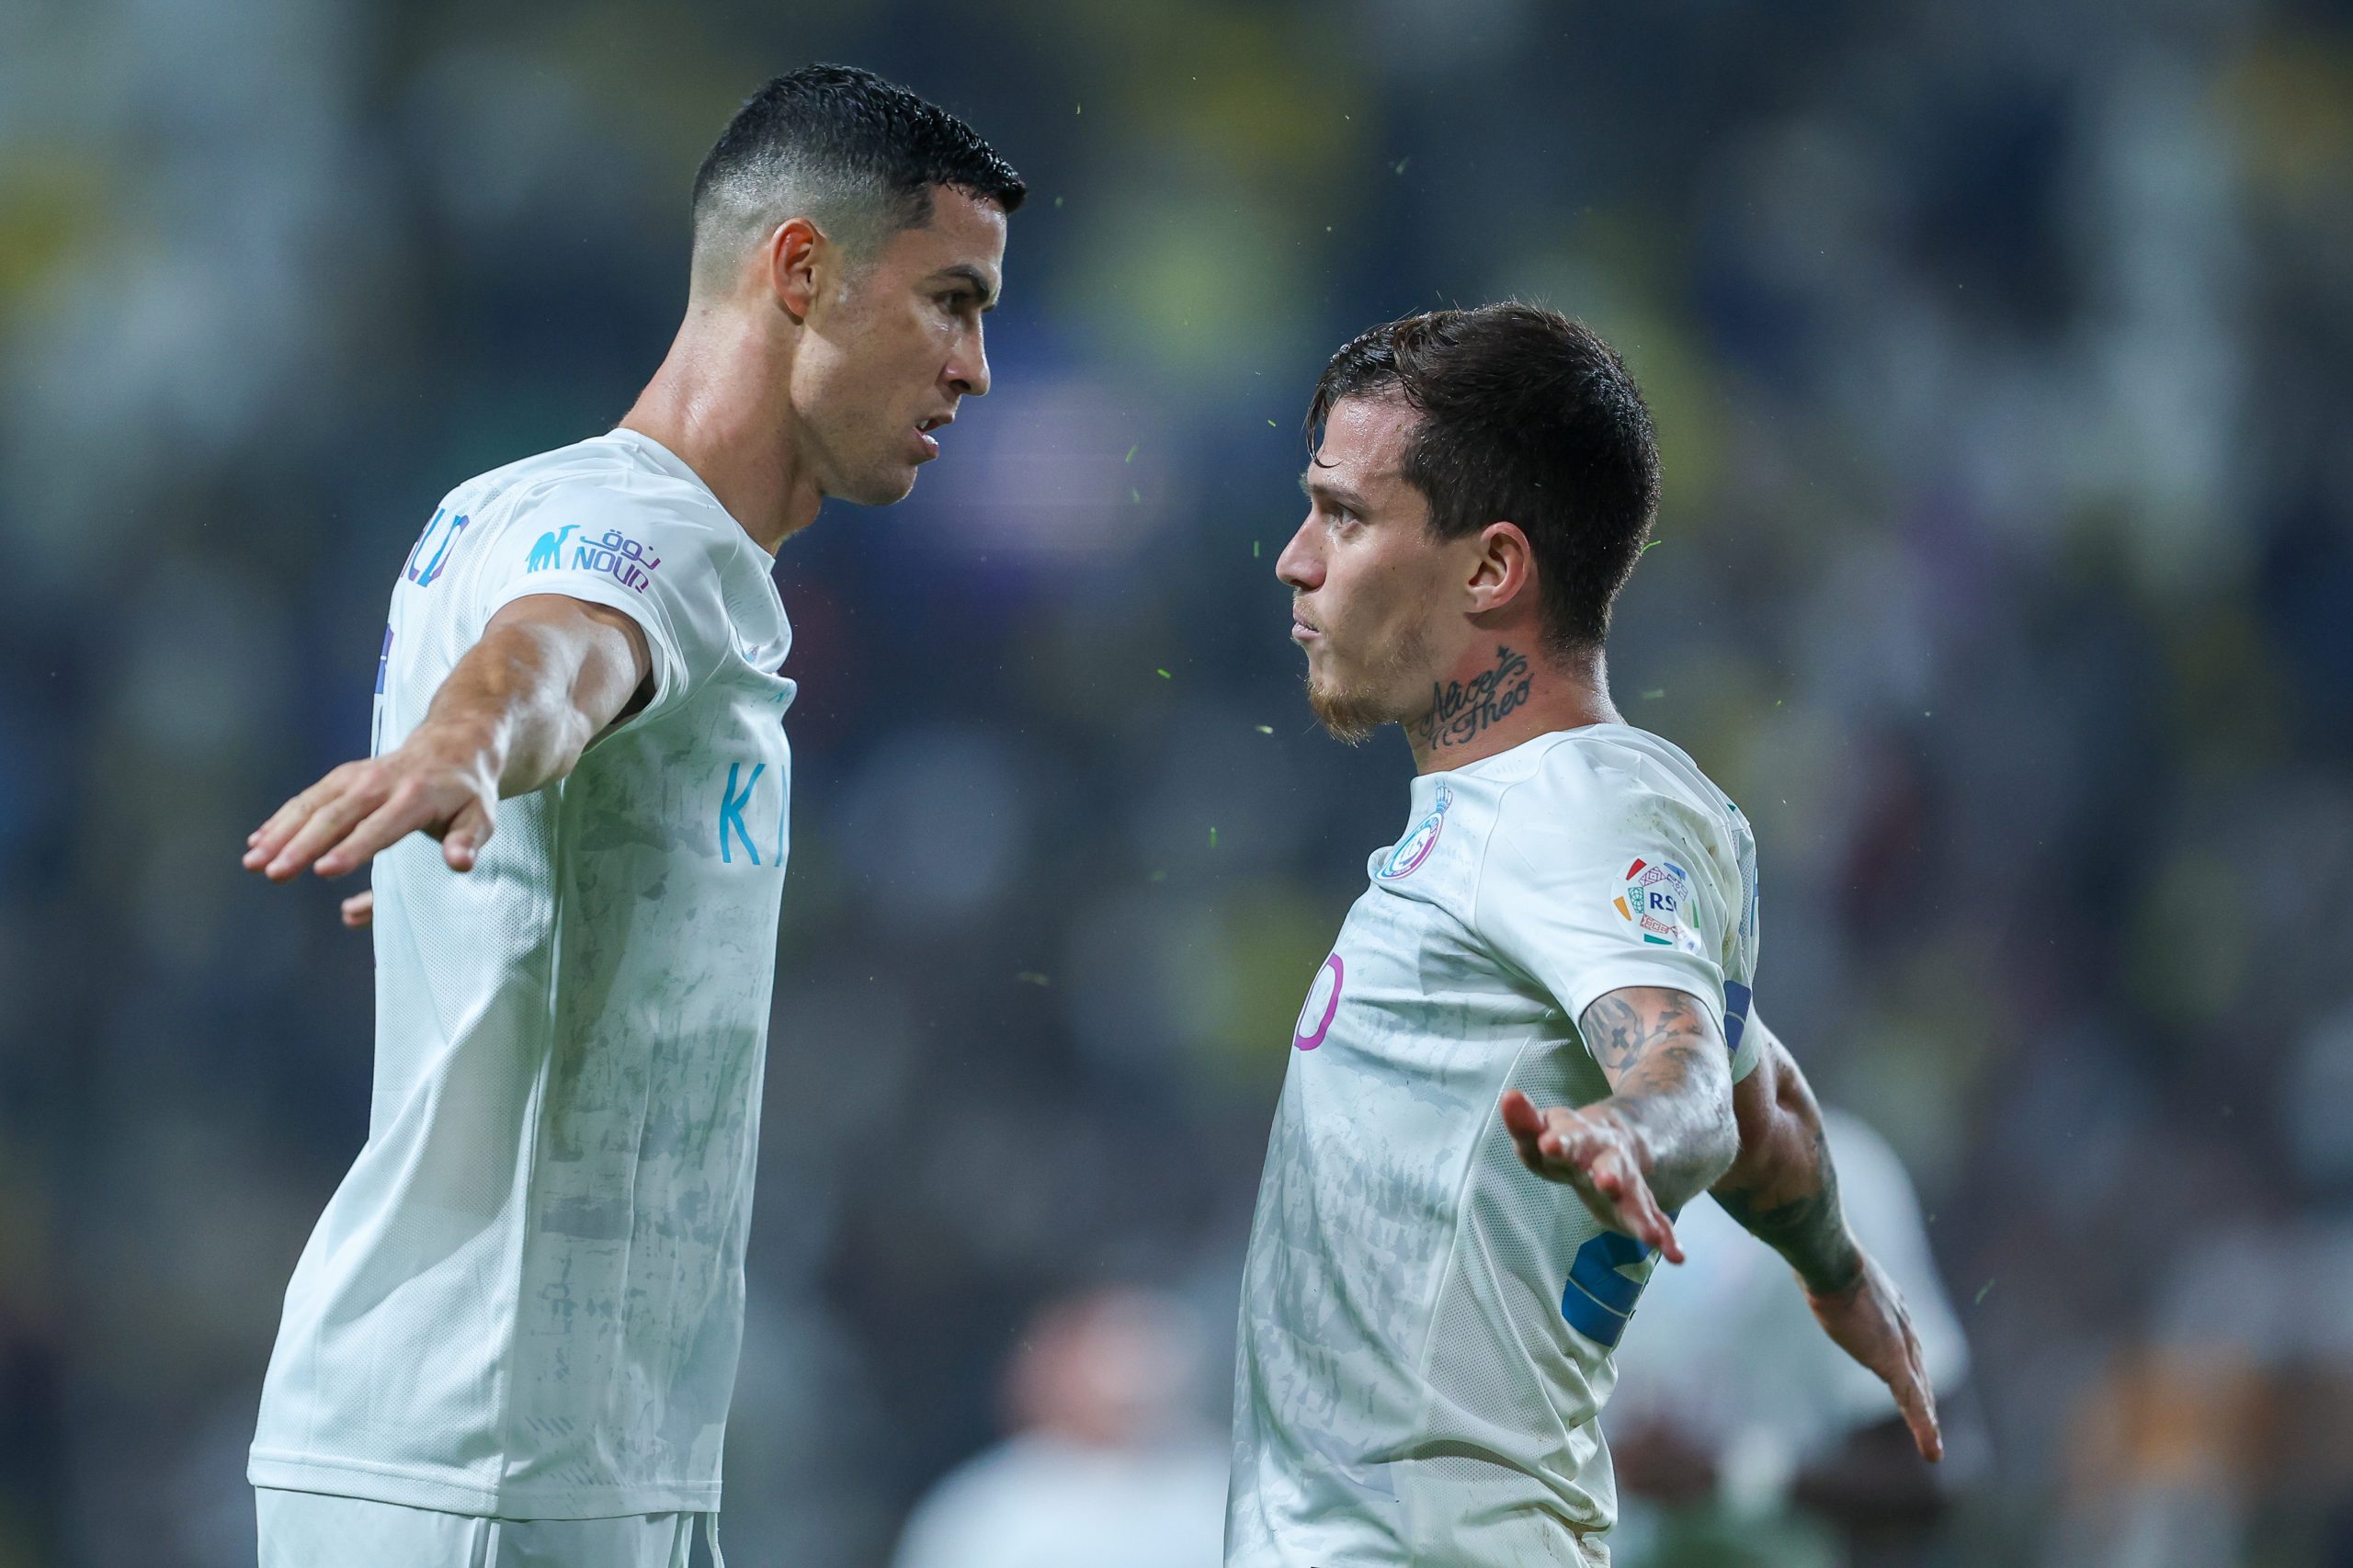 Cristiano Ronaldo celebra gol com Otávio (Foto: Yasser Bakhsh/Getty Images)